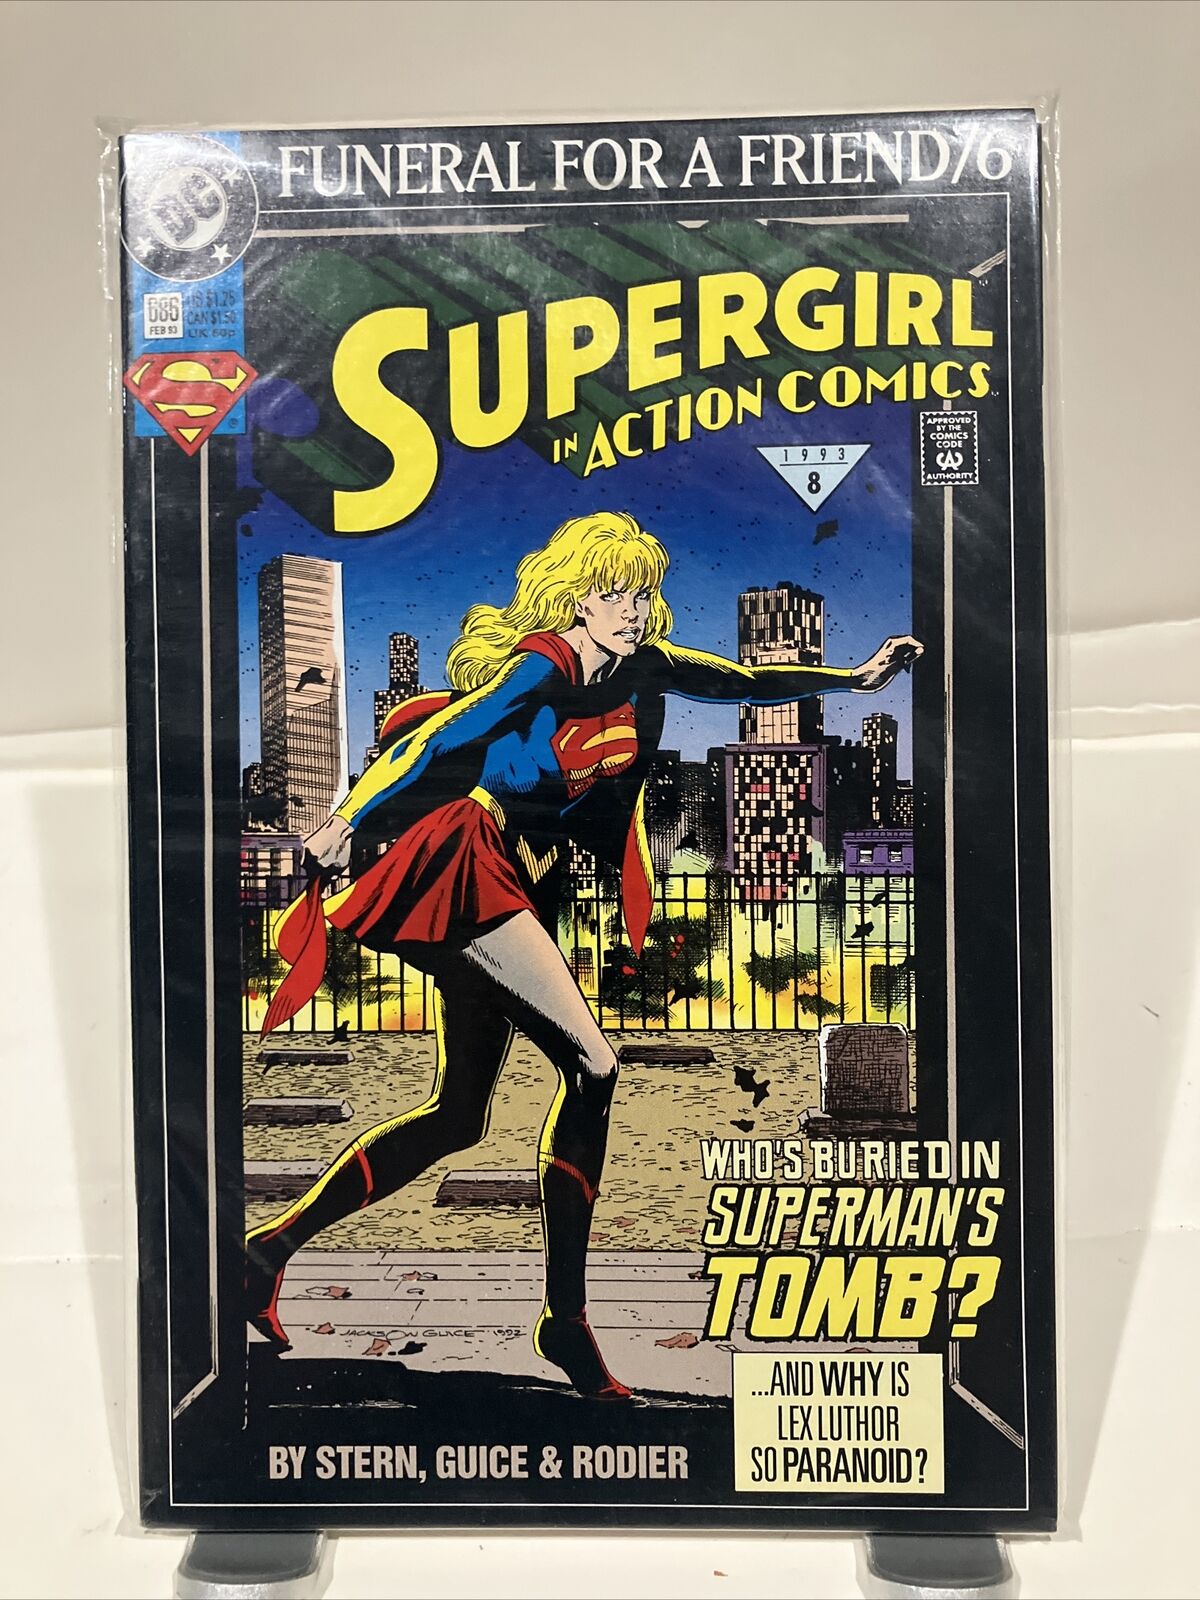 Action Comics #686 (DC Comics, February 1993)